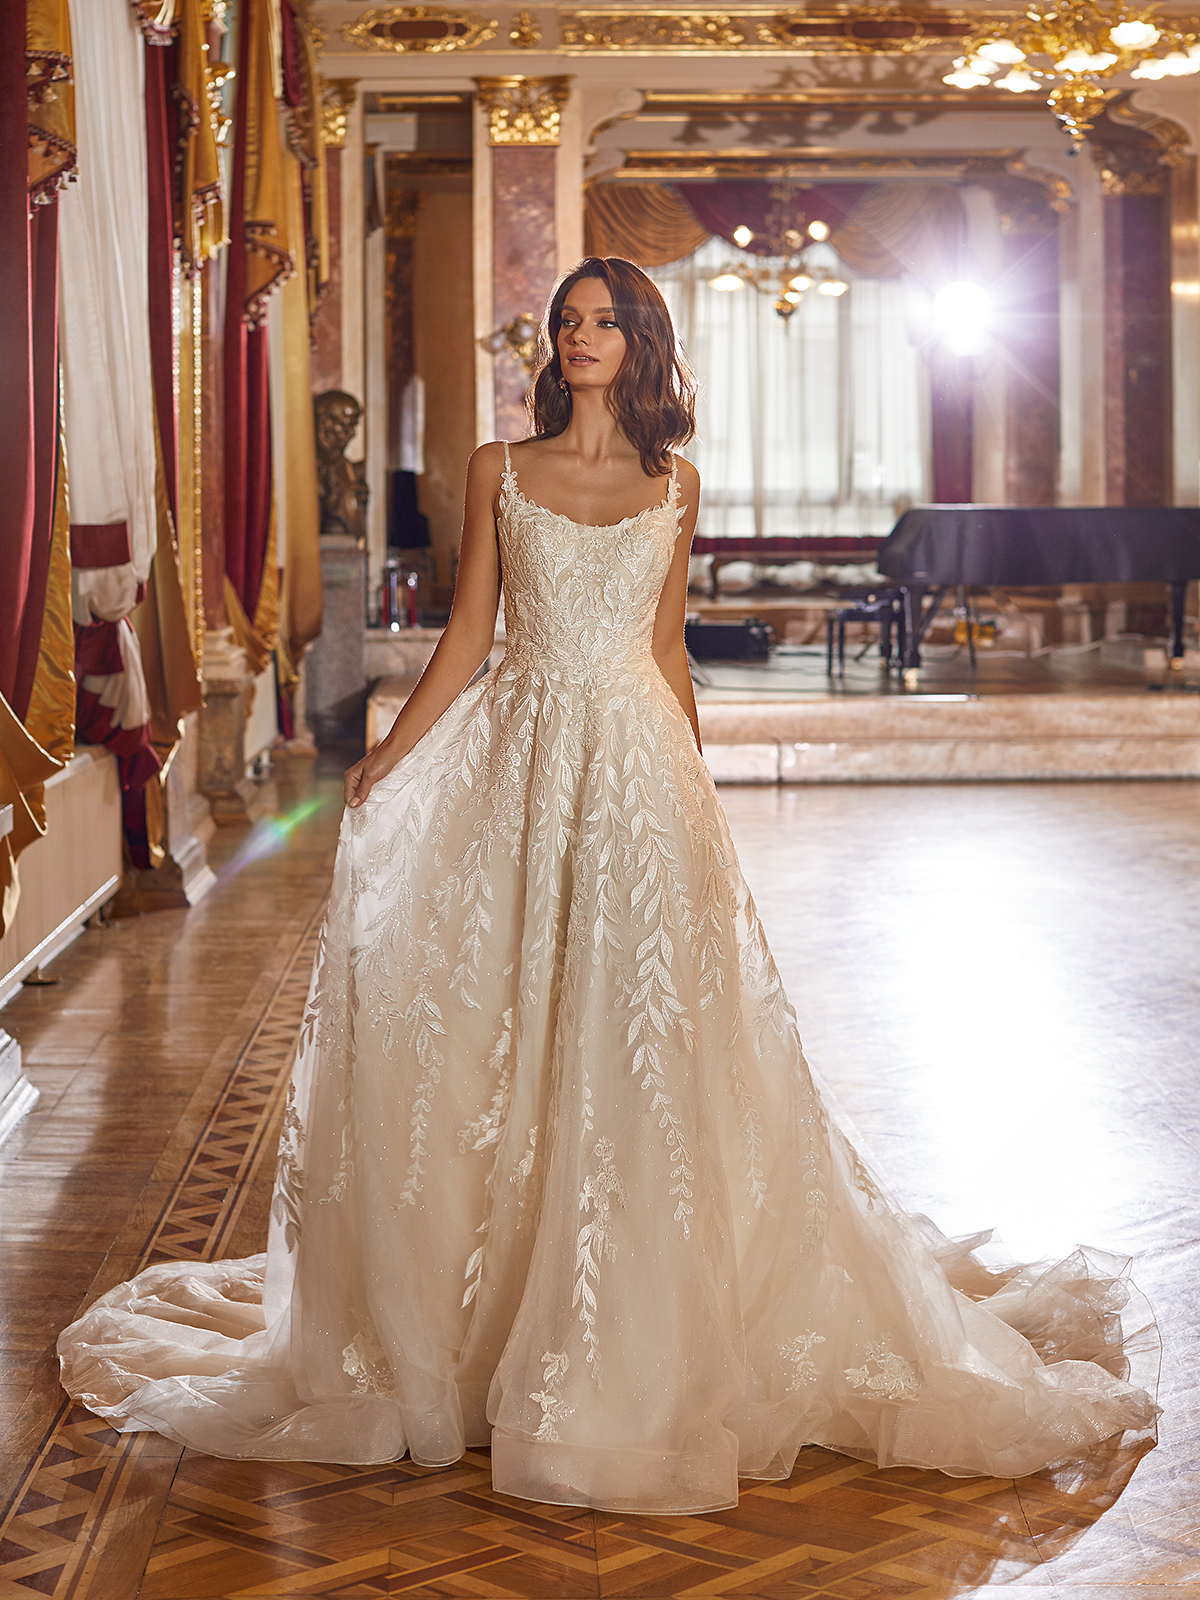 Crystal Design 2017 Wedding Dresses — Haute Couture Bridal Collection |  Wedding Inspirasi | Wedding dresses lace, Aline wedding dress, Wedding  dresses vintage princess